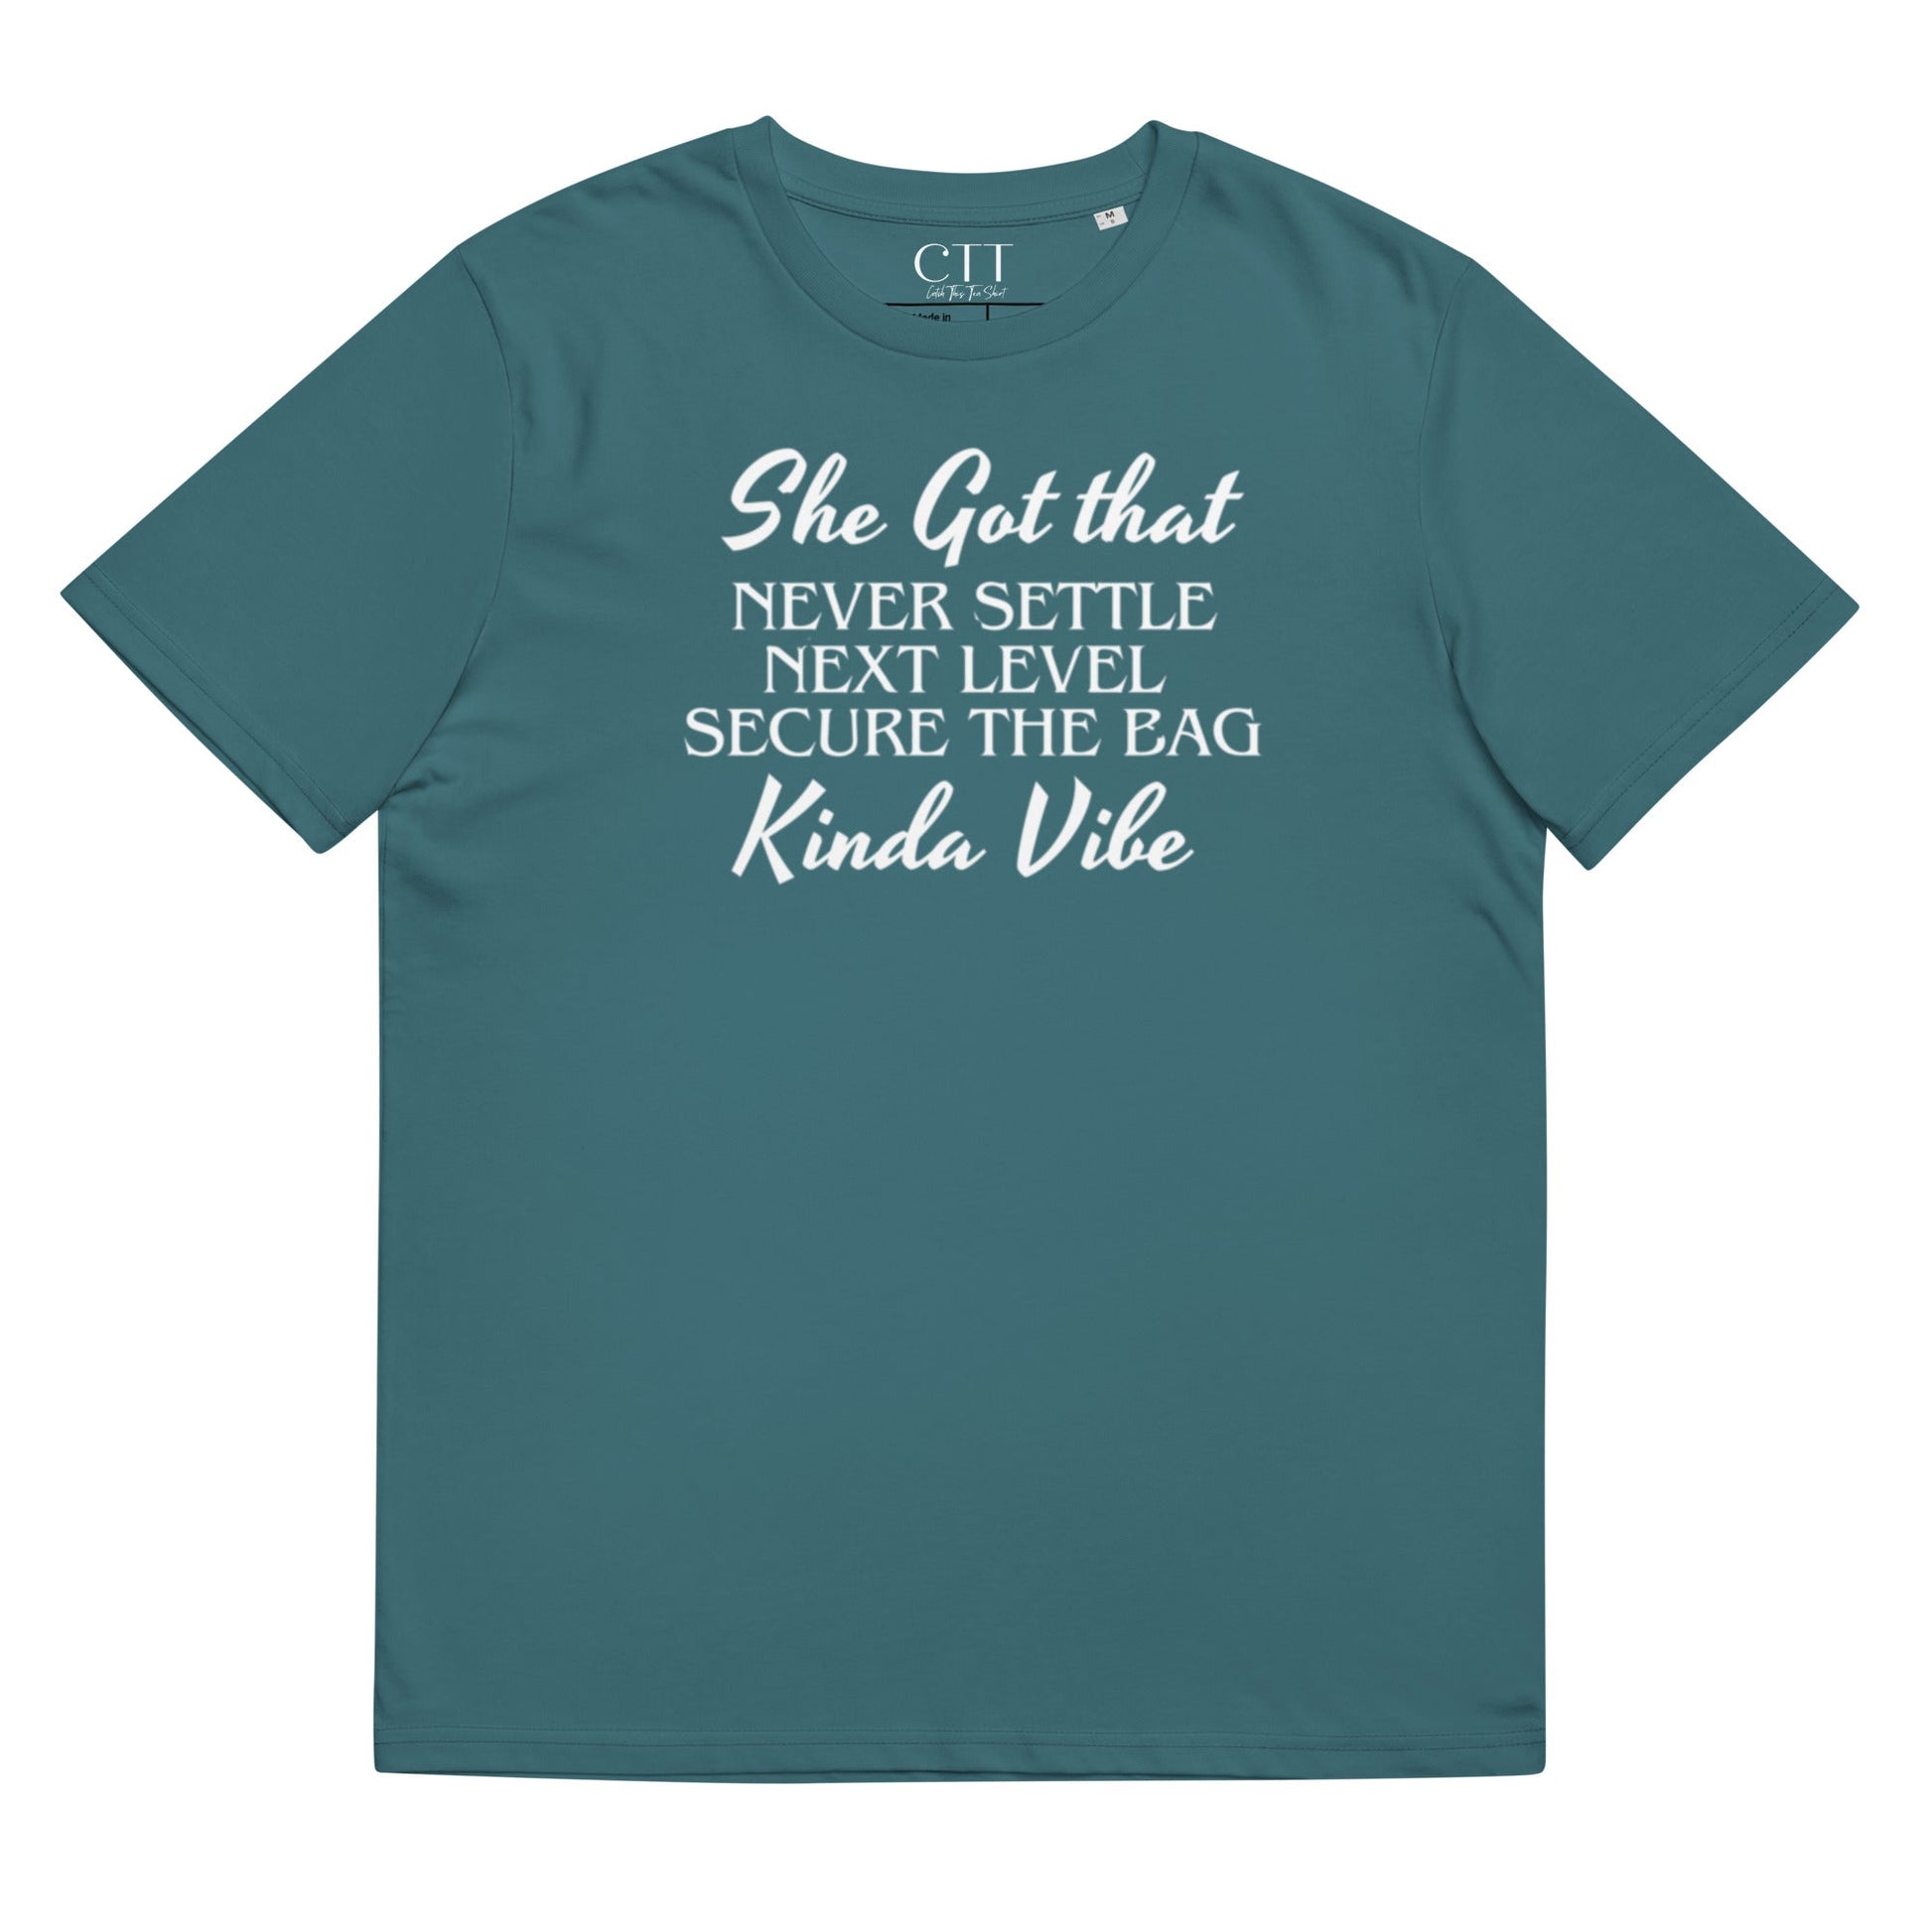 She's Got That Next Level Vibe Unisex organic cotton t-shirt - Catch This Tea Shirt